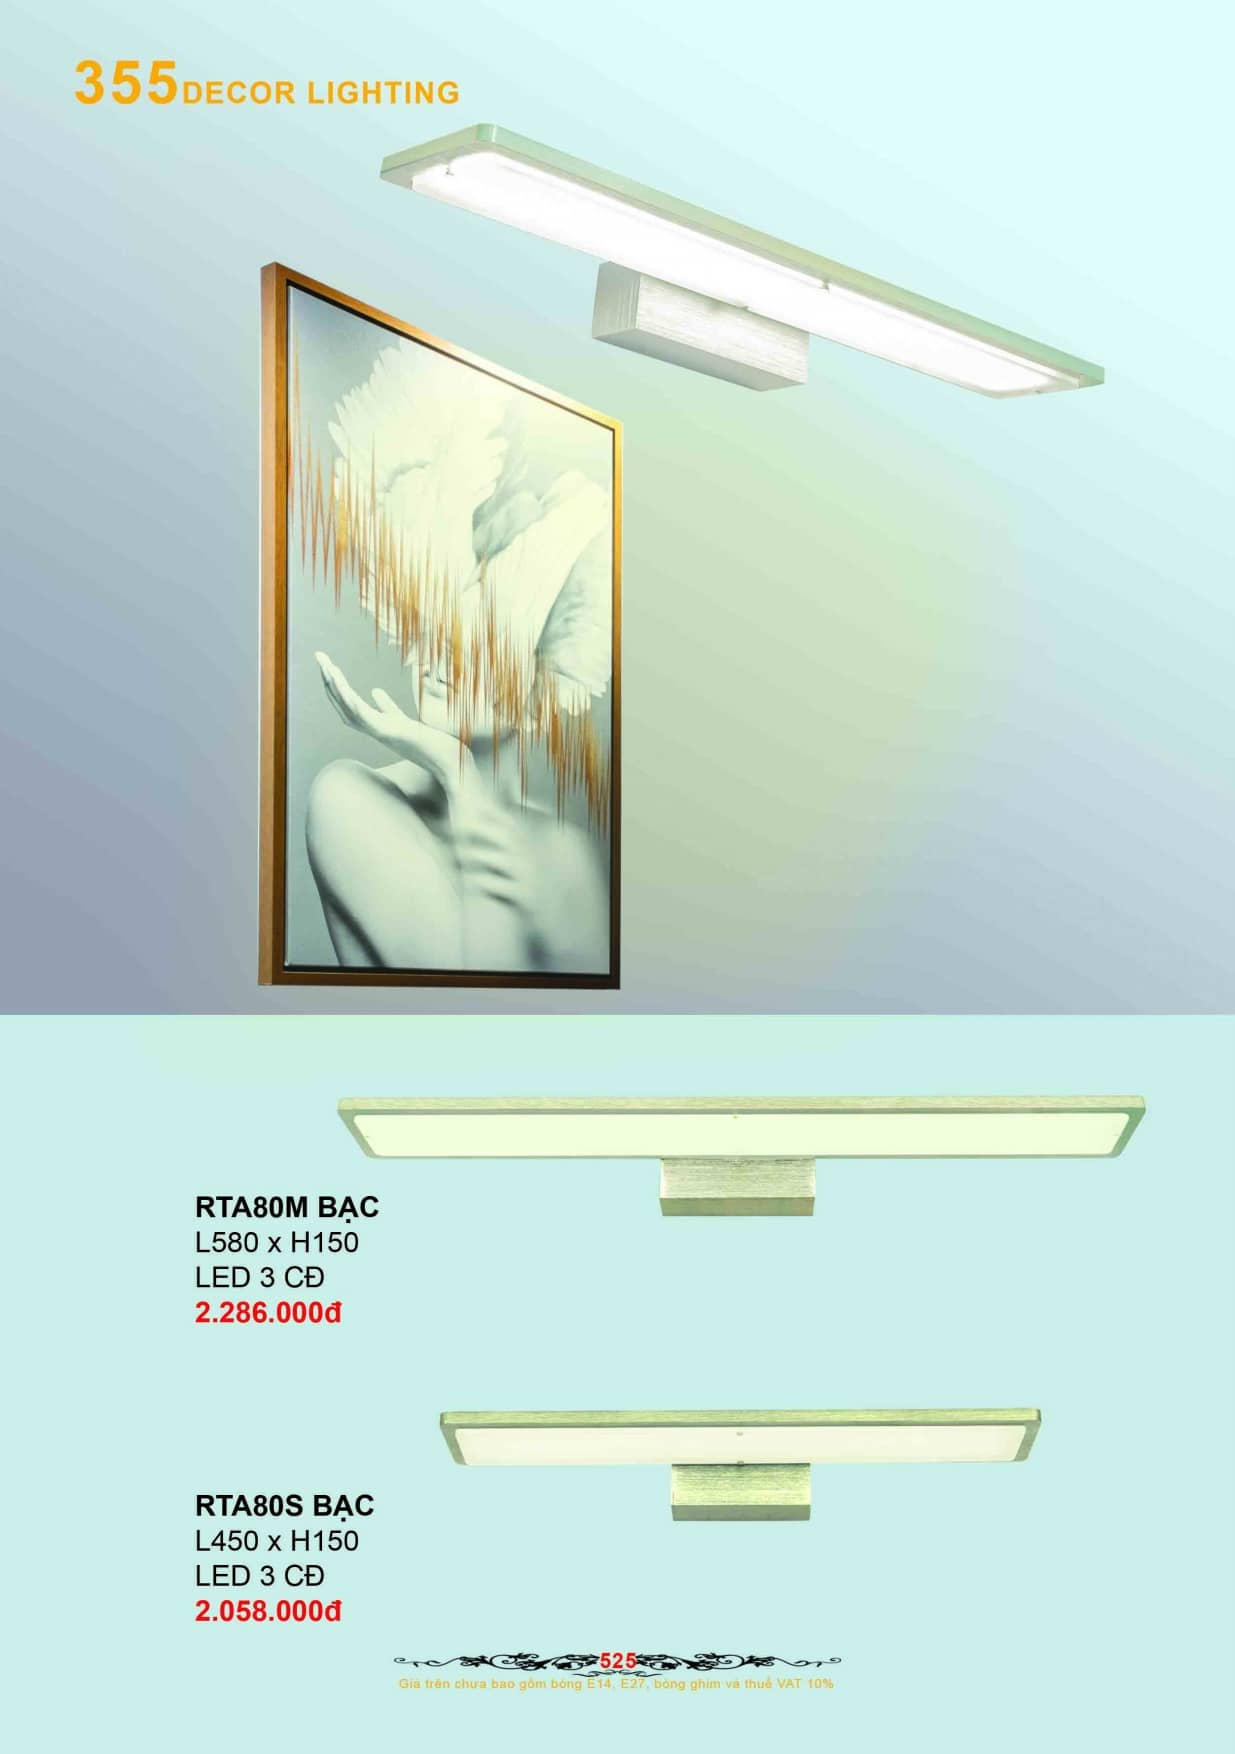 catalogue-bang-gia-den-led-trang-tri-355-lighting-546